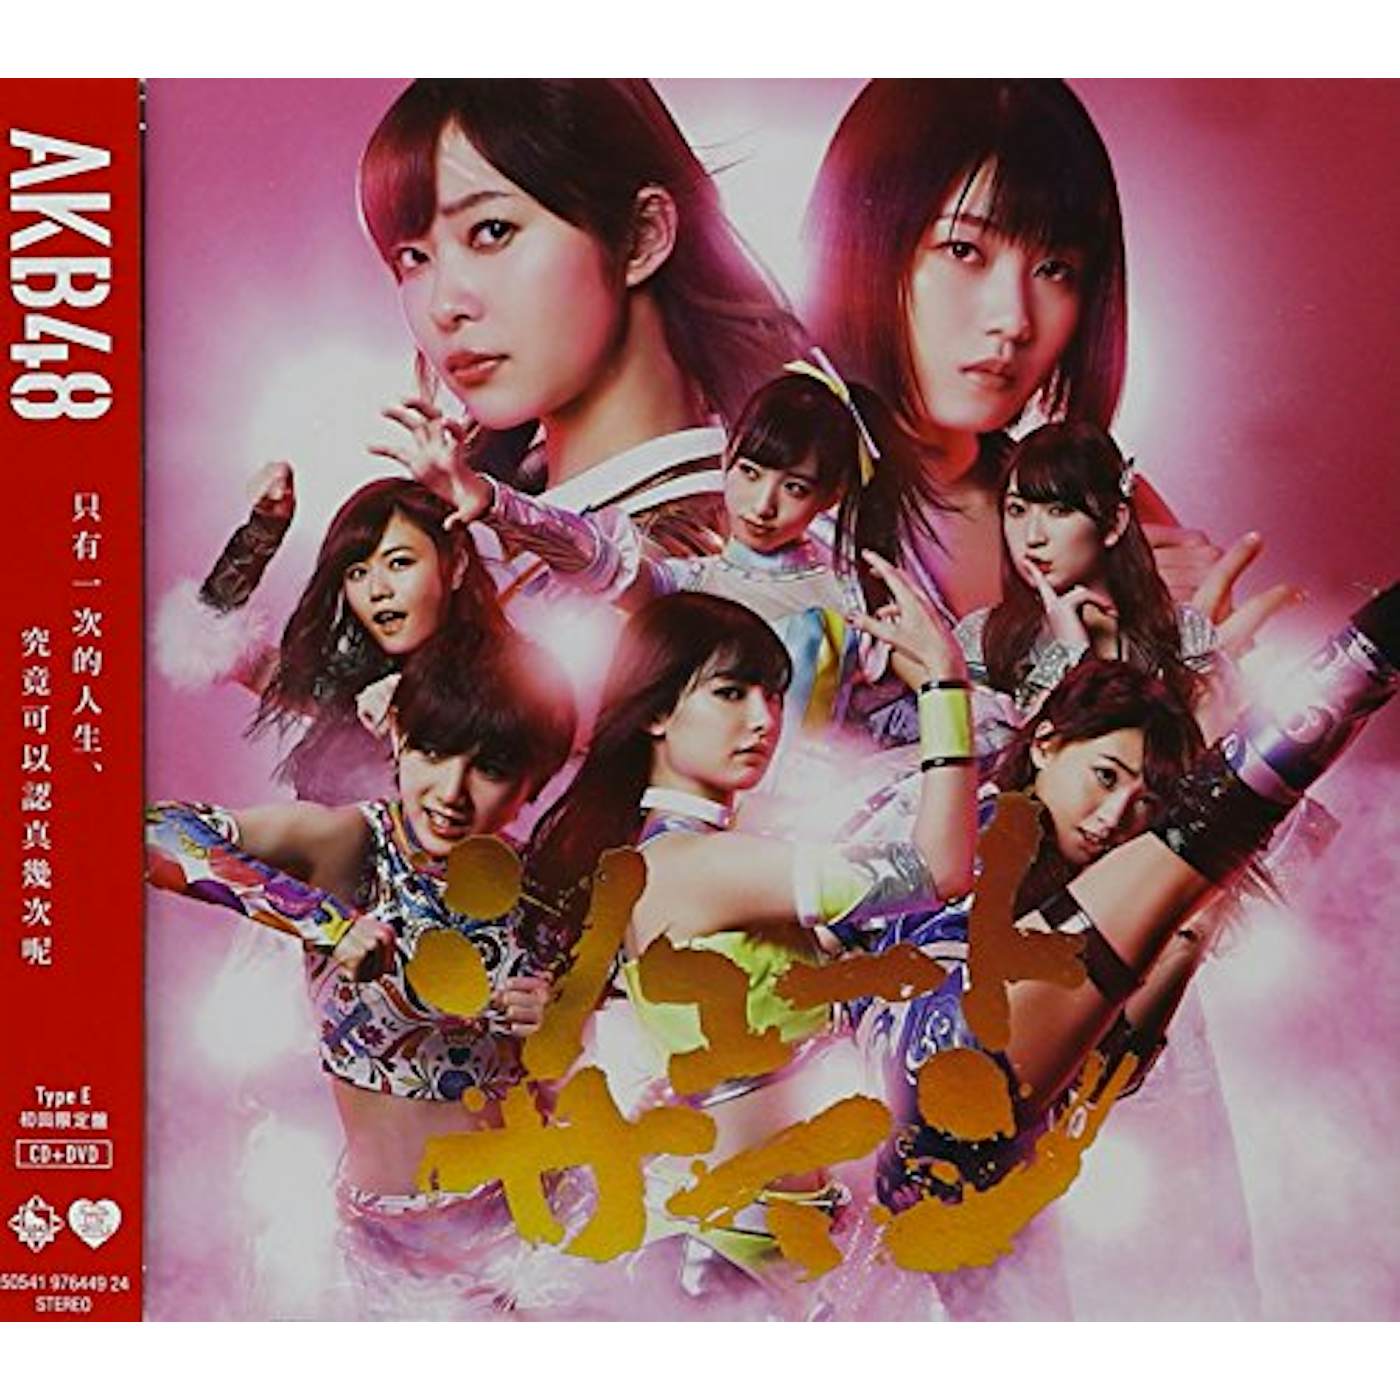 AKB48 SHOOT SIGN: DELUXE VERSION E CD